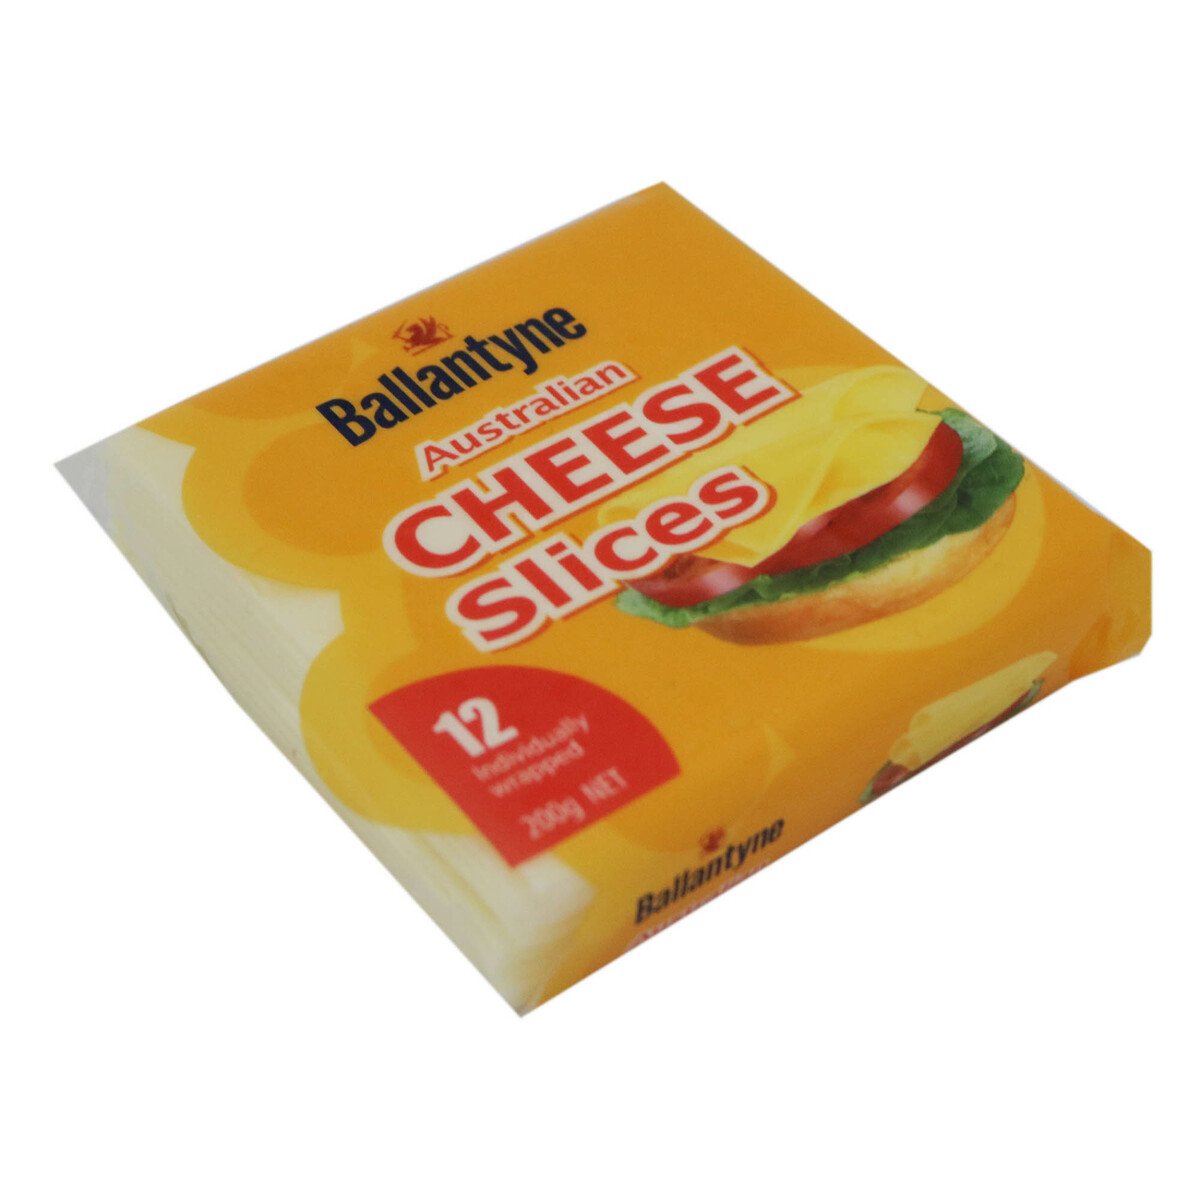 Ballantyne Cheese Slice 200g